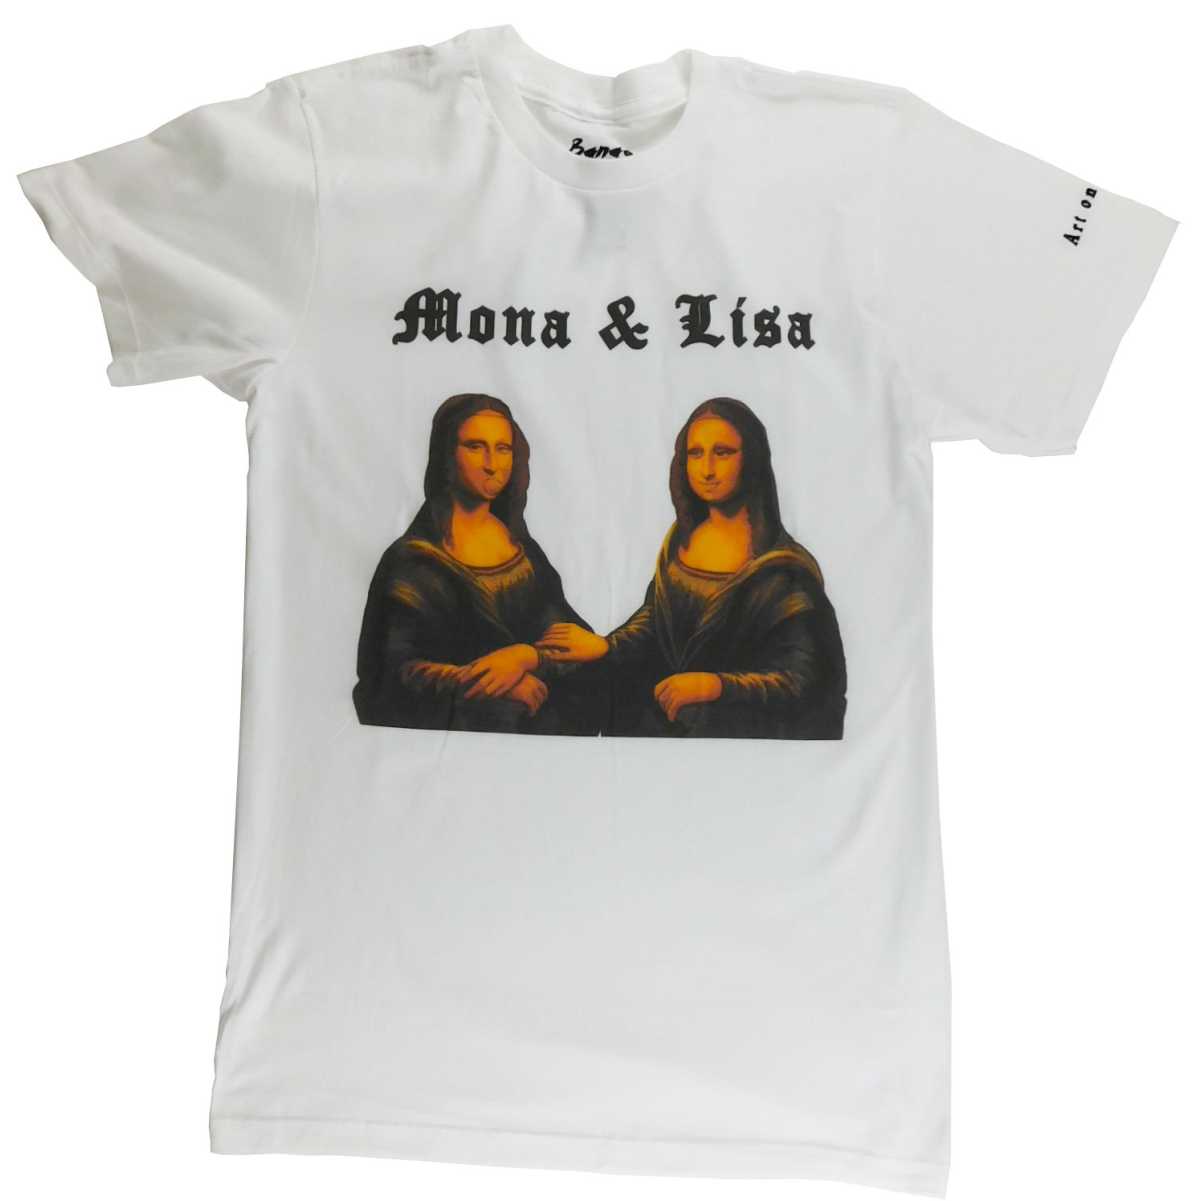 Meet our Twins Mona and Lisa - A Double Art T-Shirt